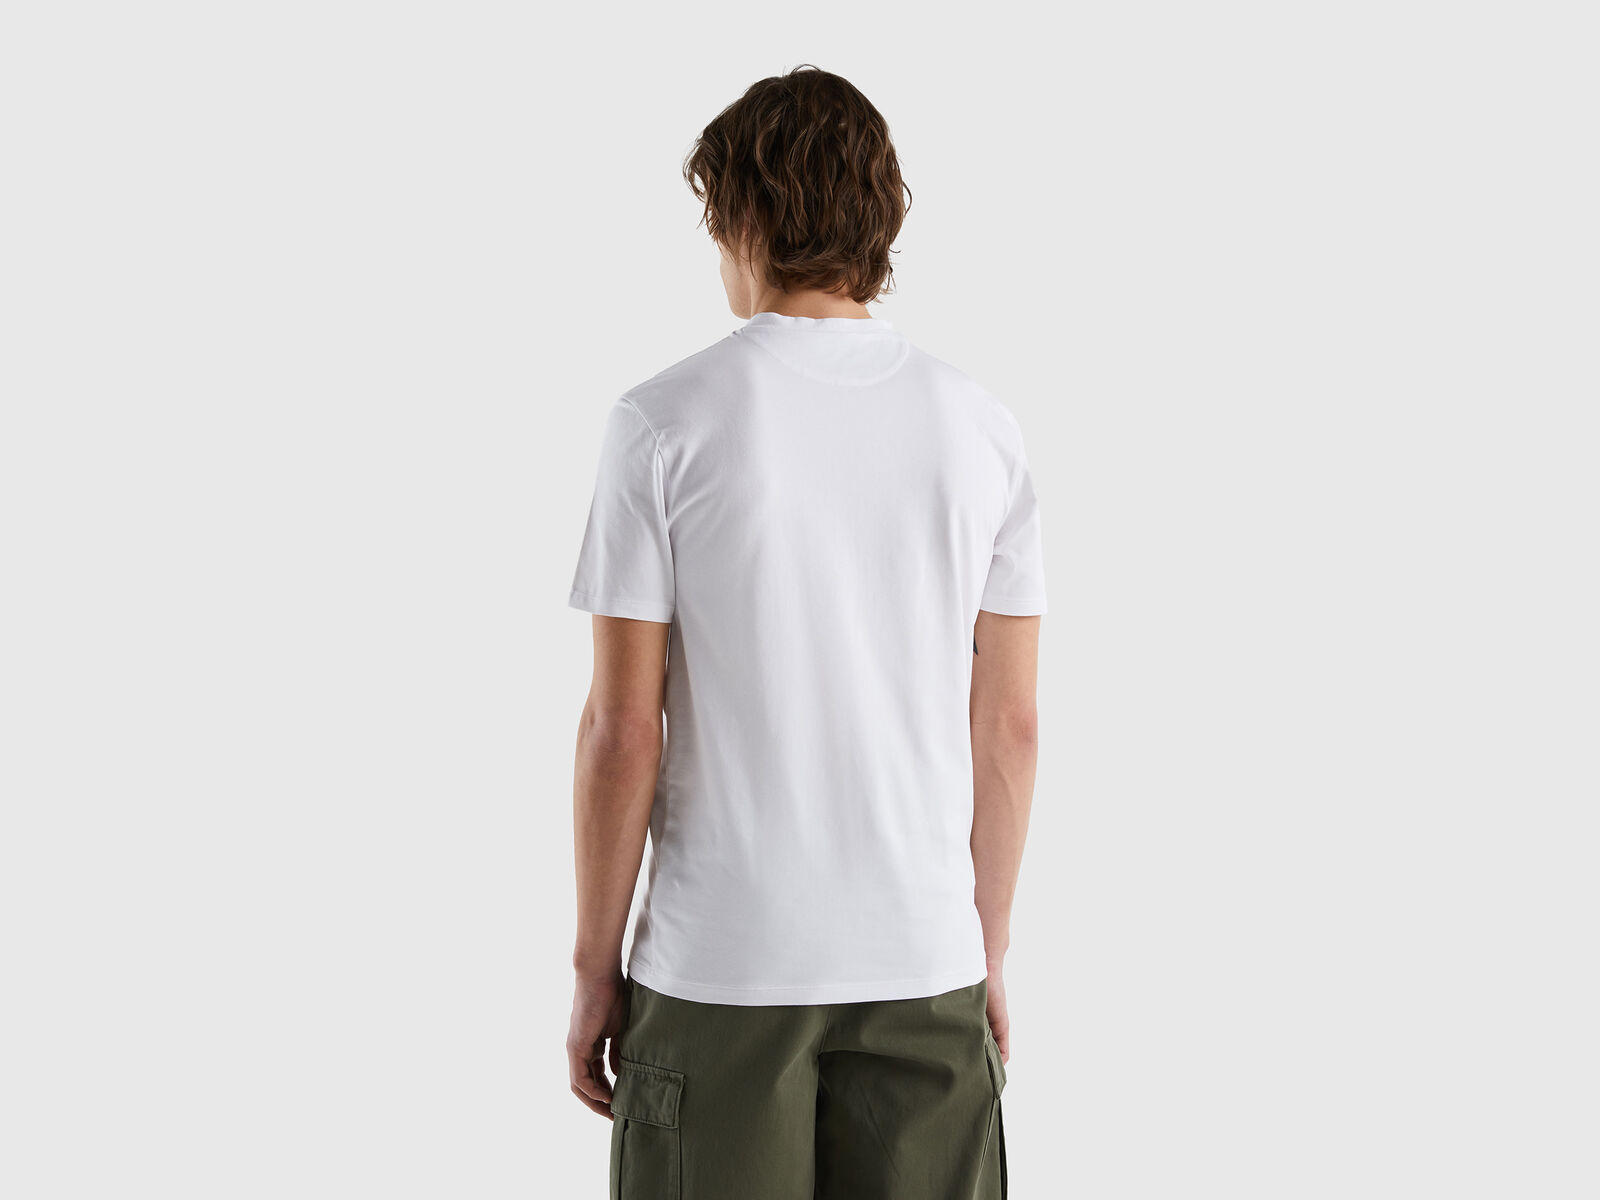 fit | Slim t-shirt Benetton stretch cotton in - White